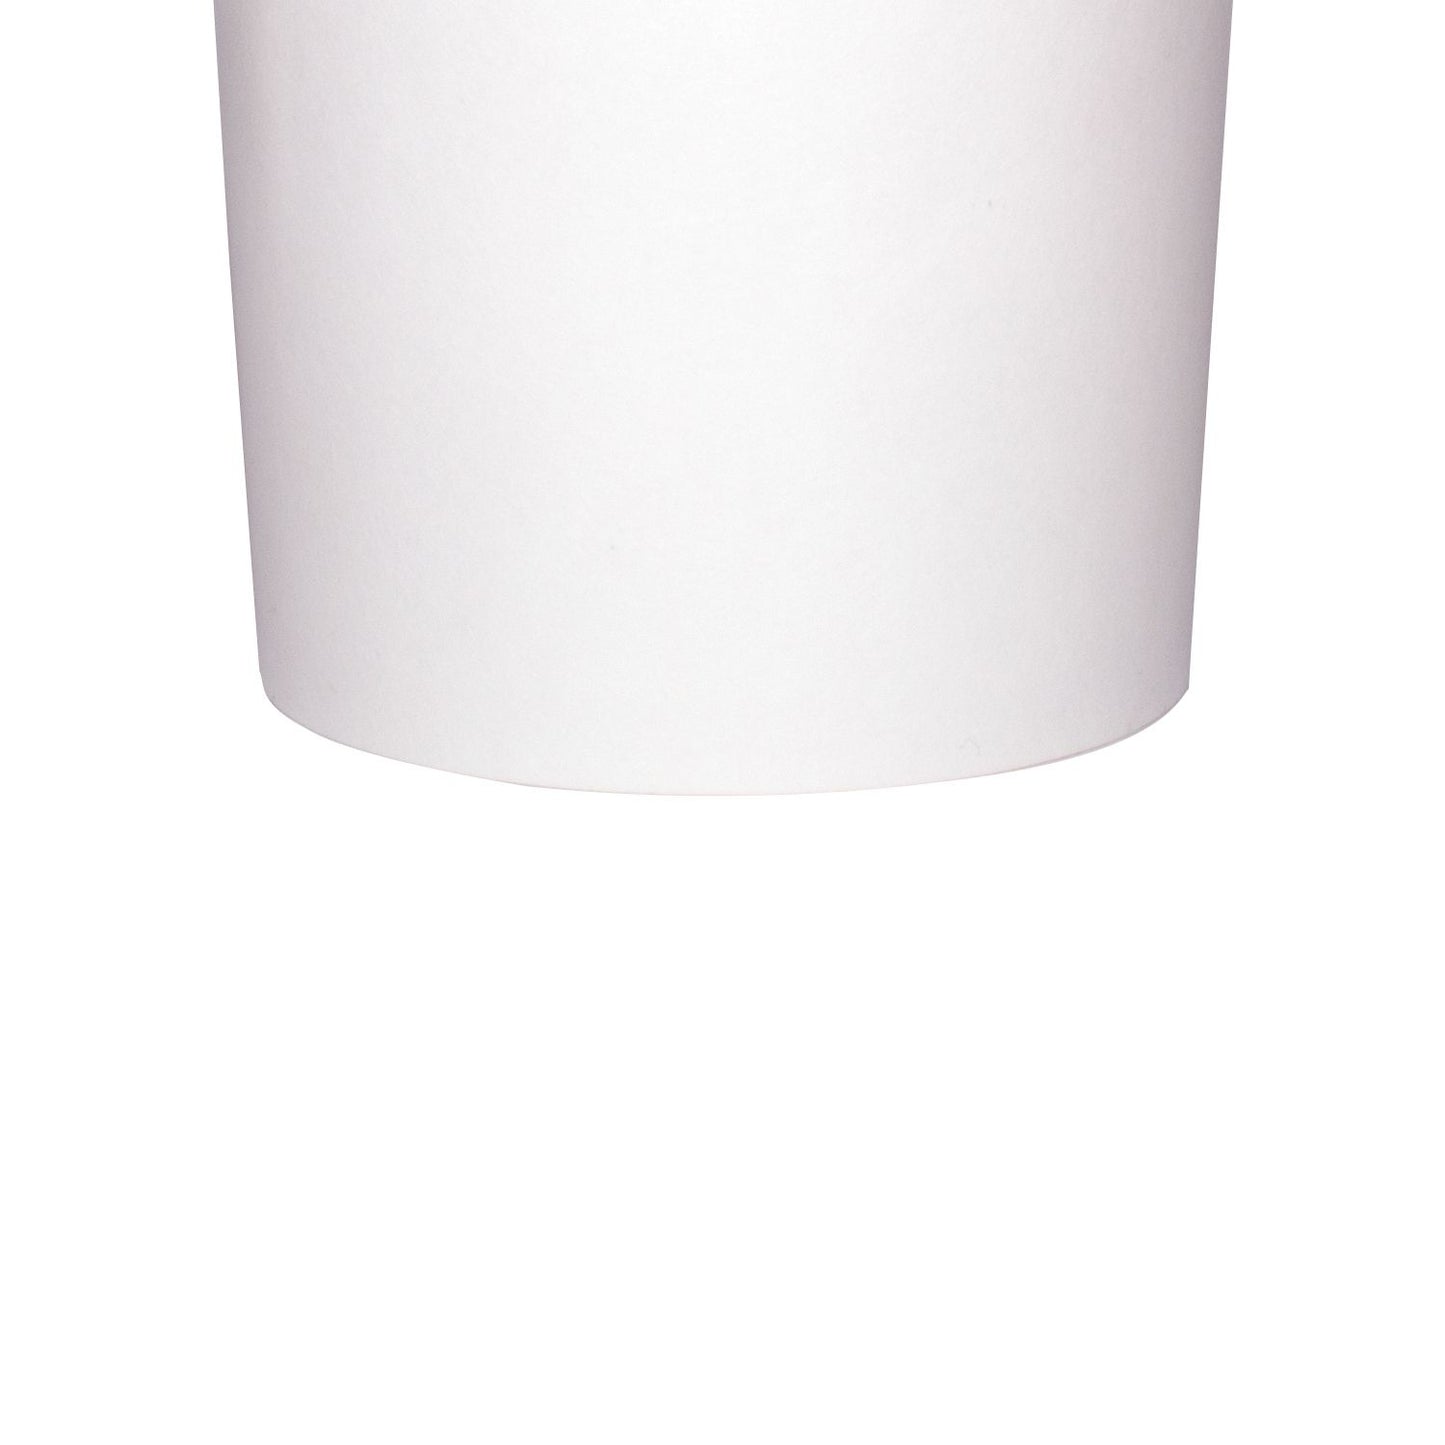 Karat 32oz Gourmet Food Container - White (115mm) - 500 ct